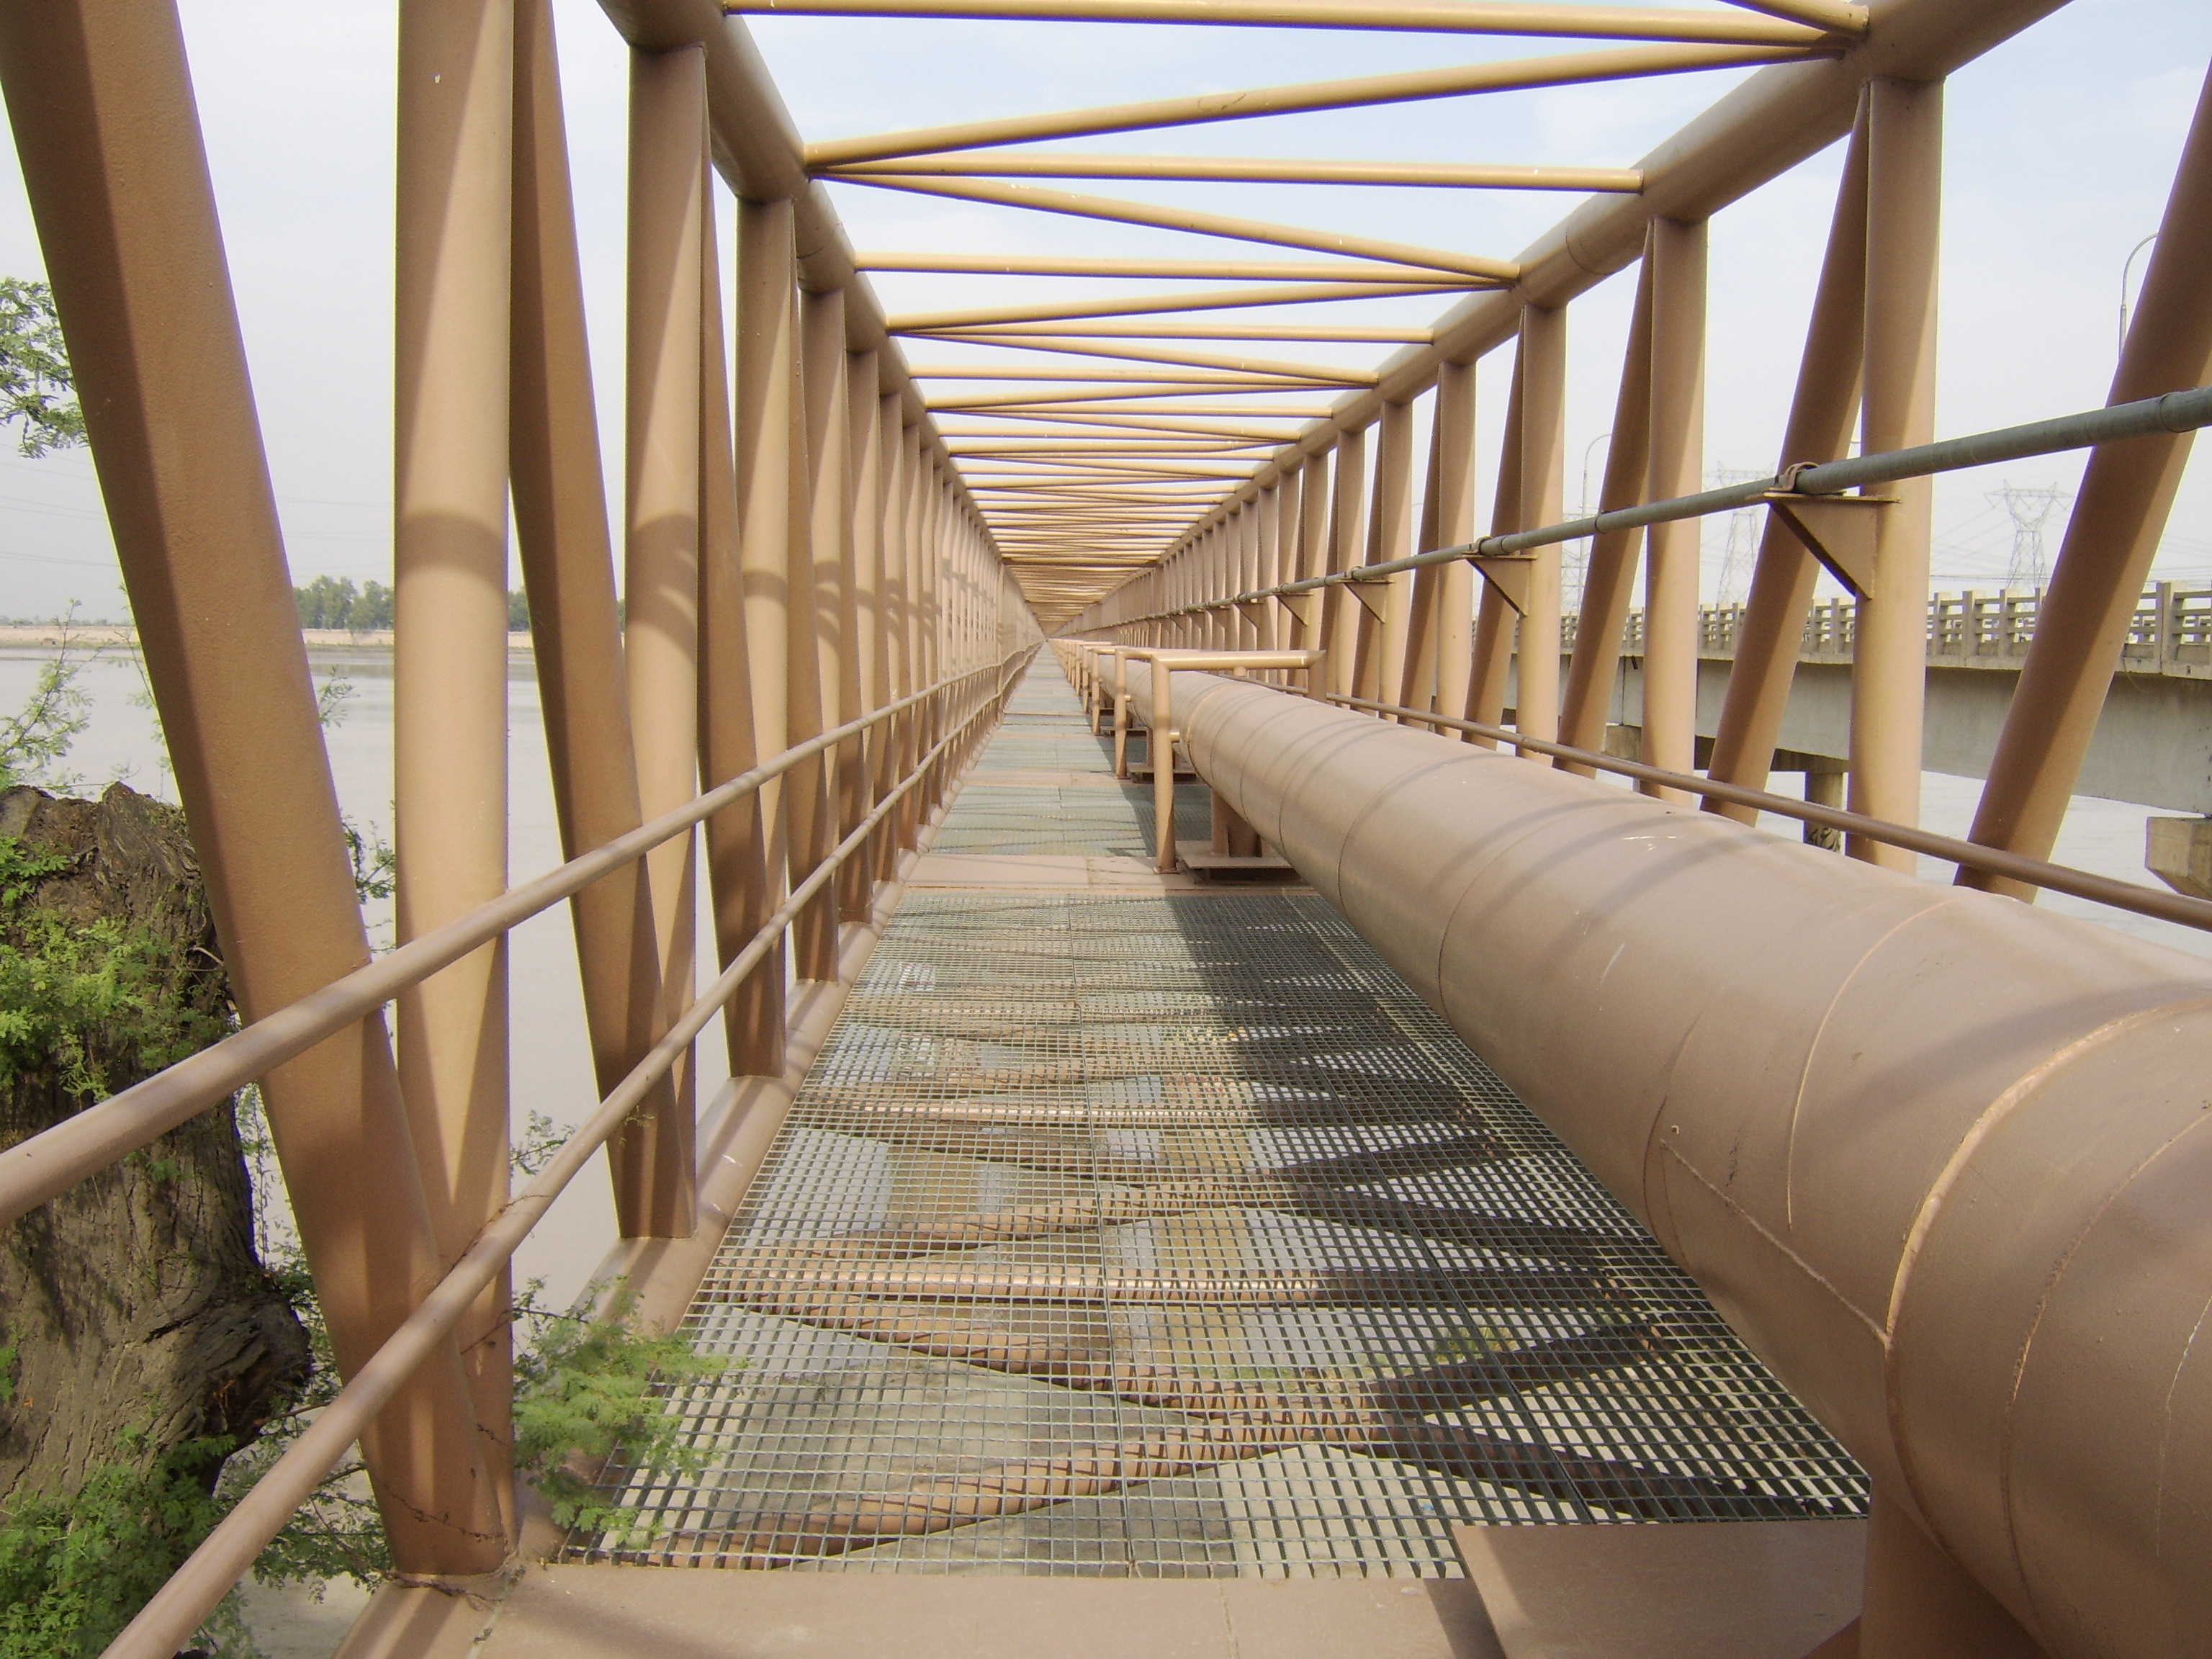 Ghazi Ghat Indus River crossing of PAPCO White Oil Pipeline